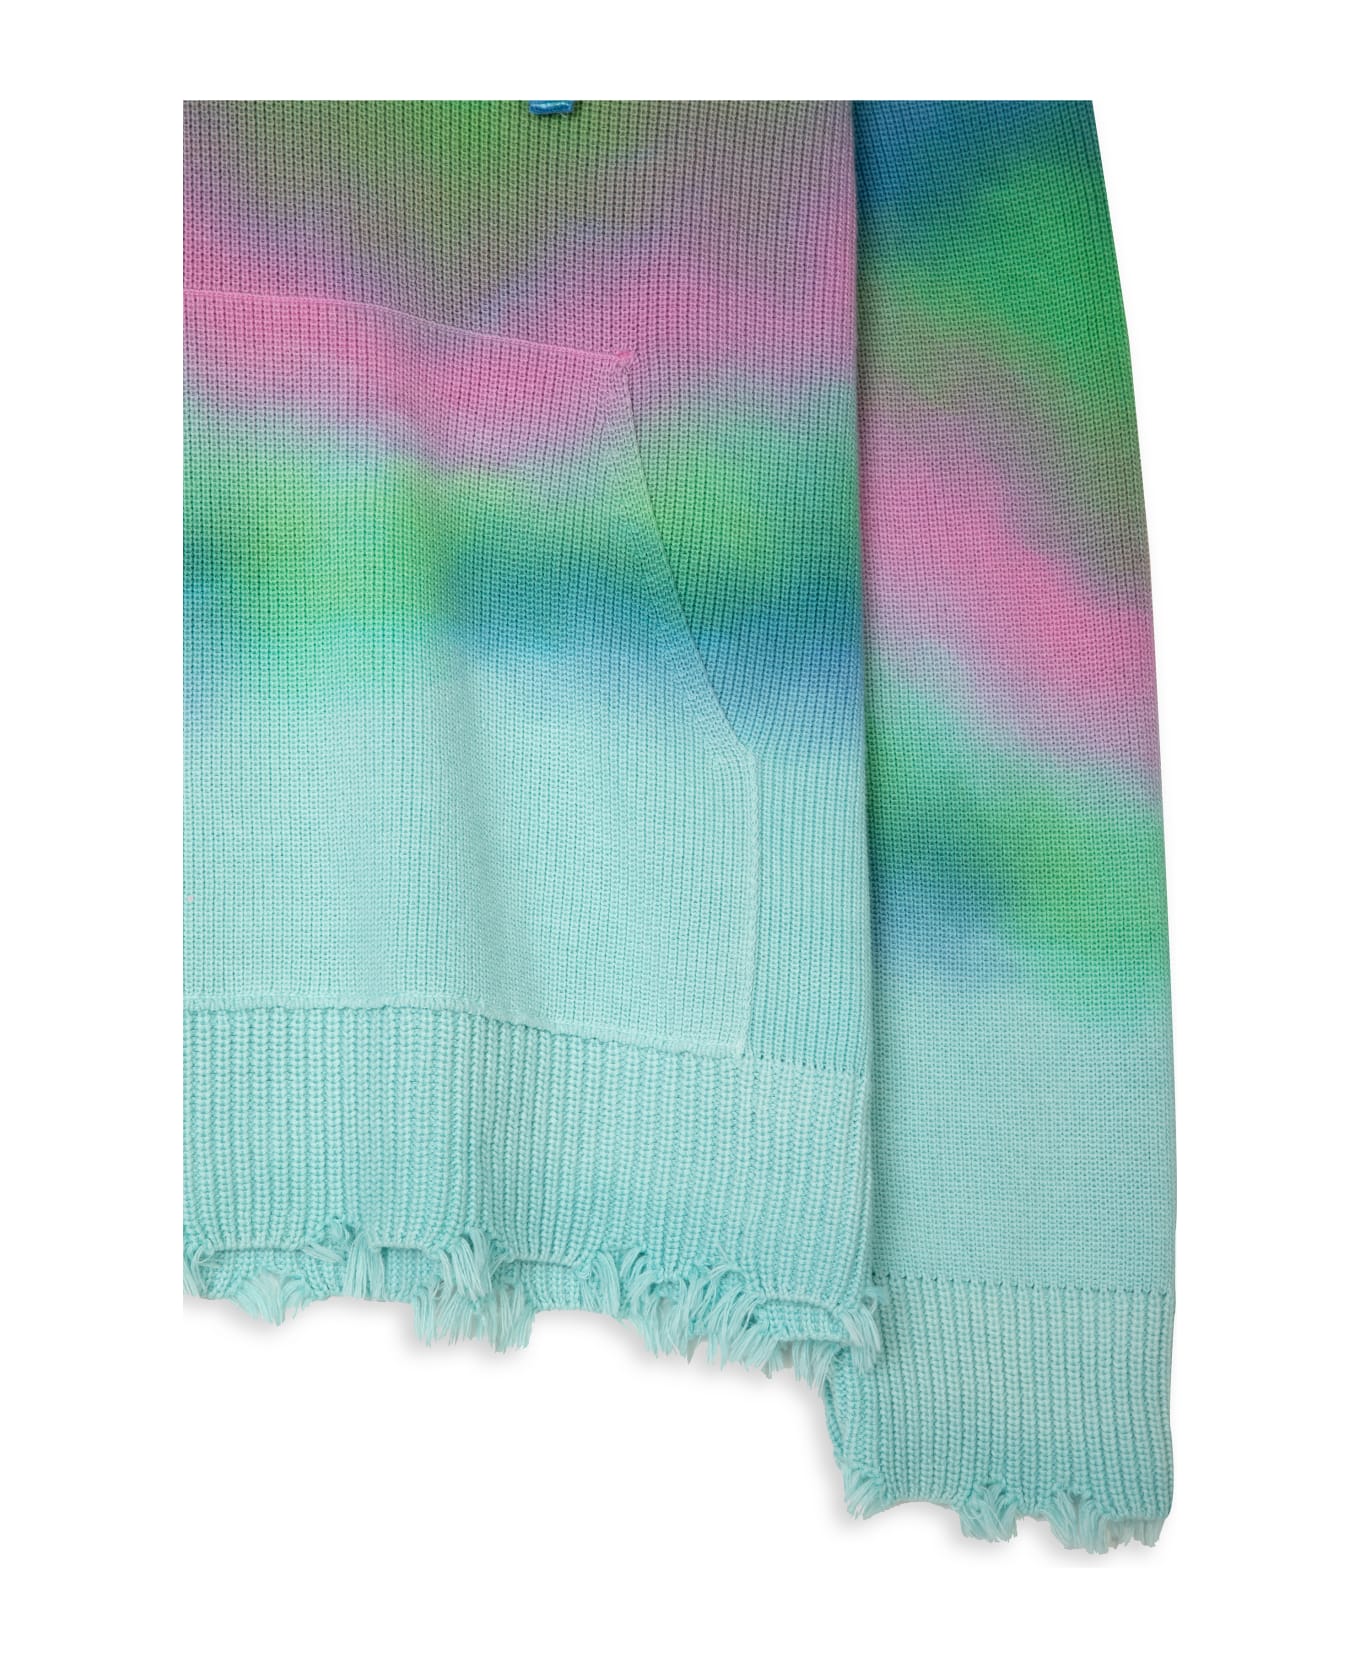 Laneus Cappuccio Multicolor Print Multicolor Tie-dye Cotton Hooded Sweater Laneus - MULTICOLOR フリース